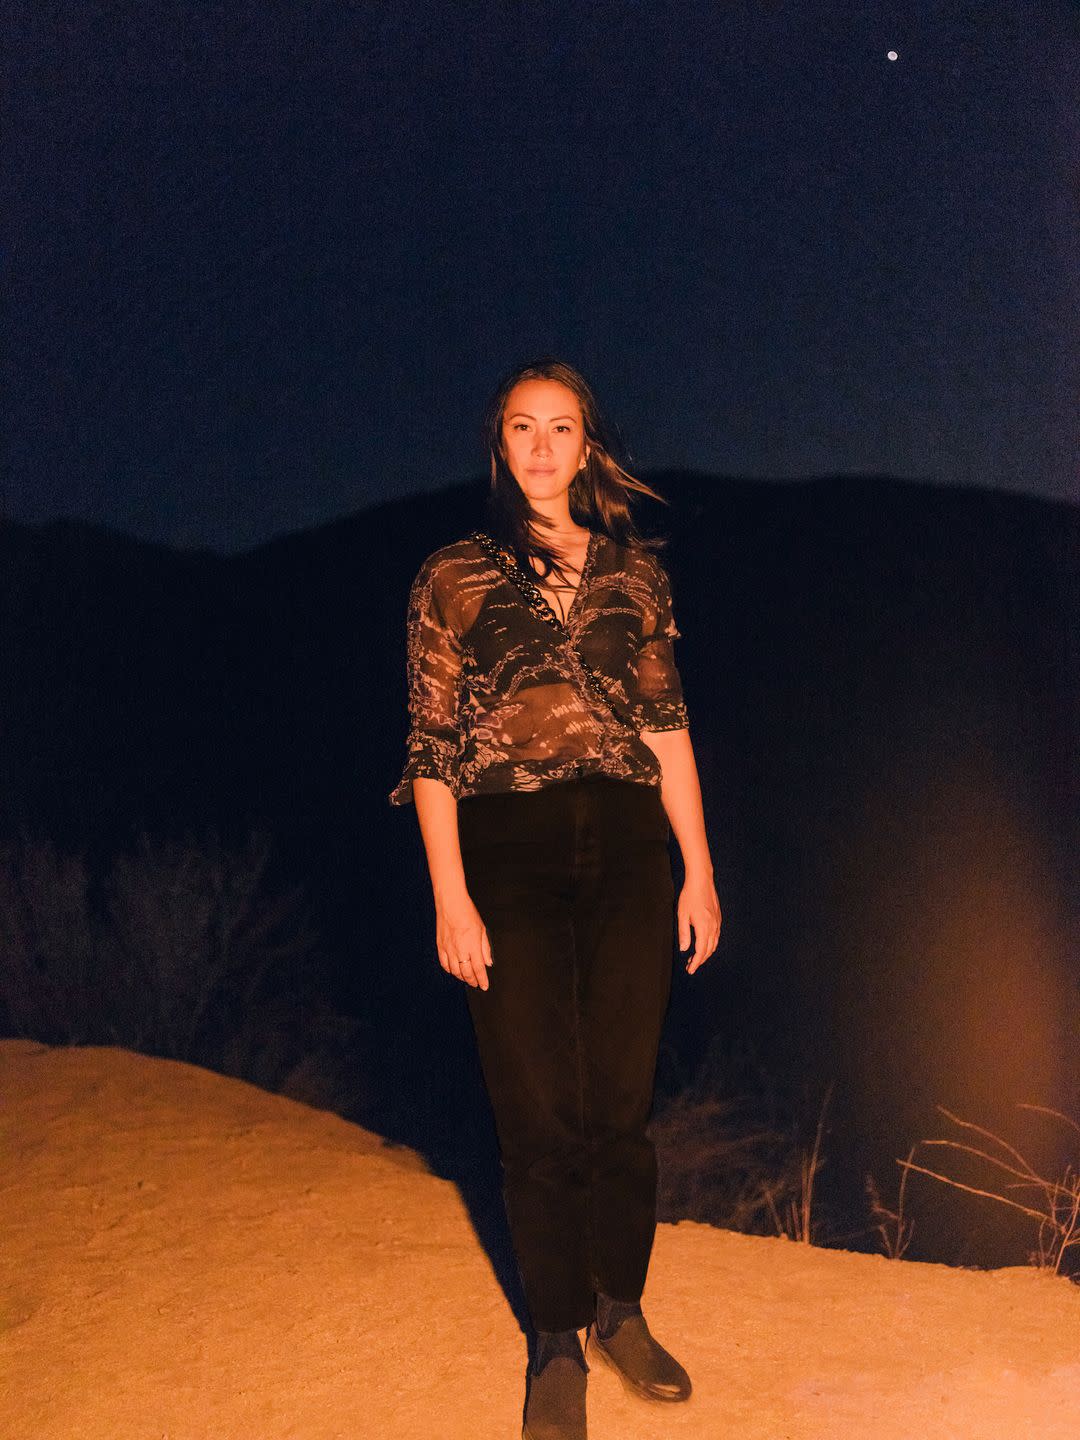 kara designer sarah law in a sheer printed top and black trousers standing outdoors at night